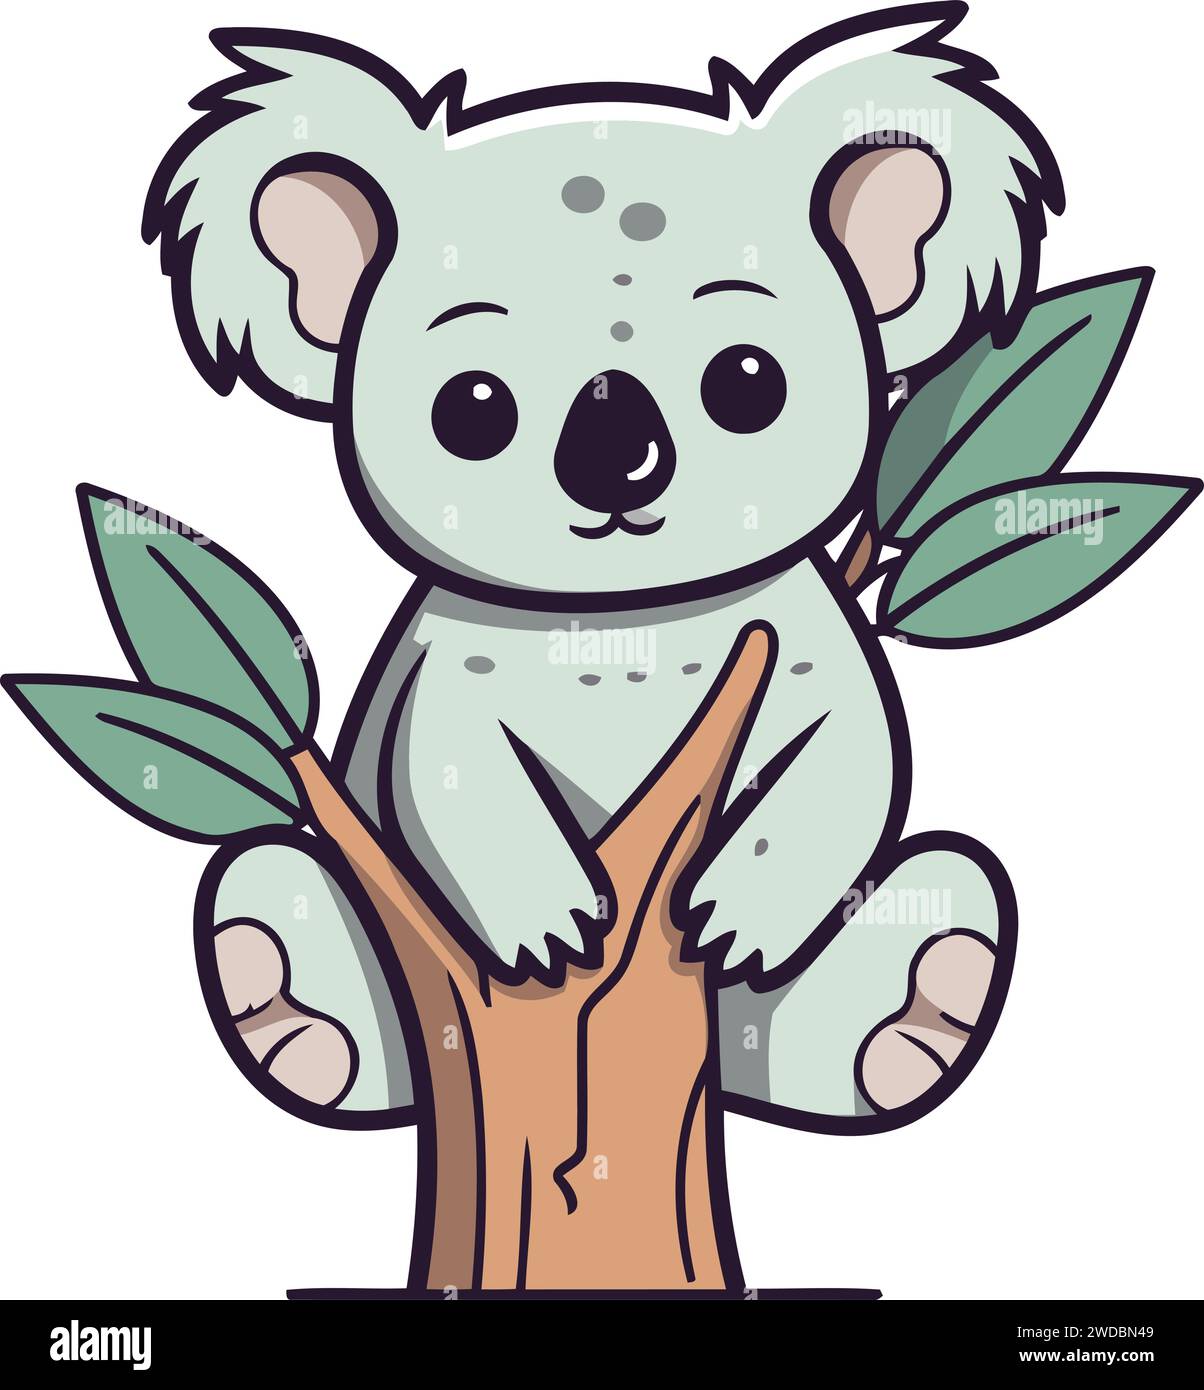 Cute koala sitting on a tree branch. Vector illustration. Stock Vector